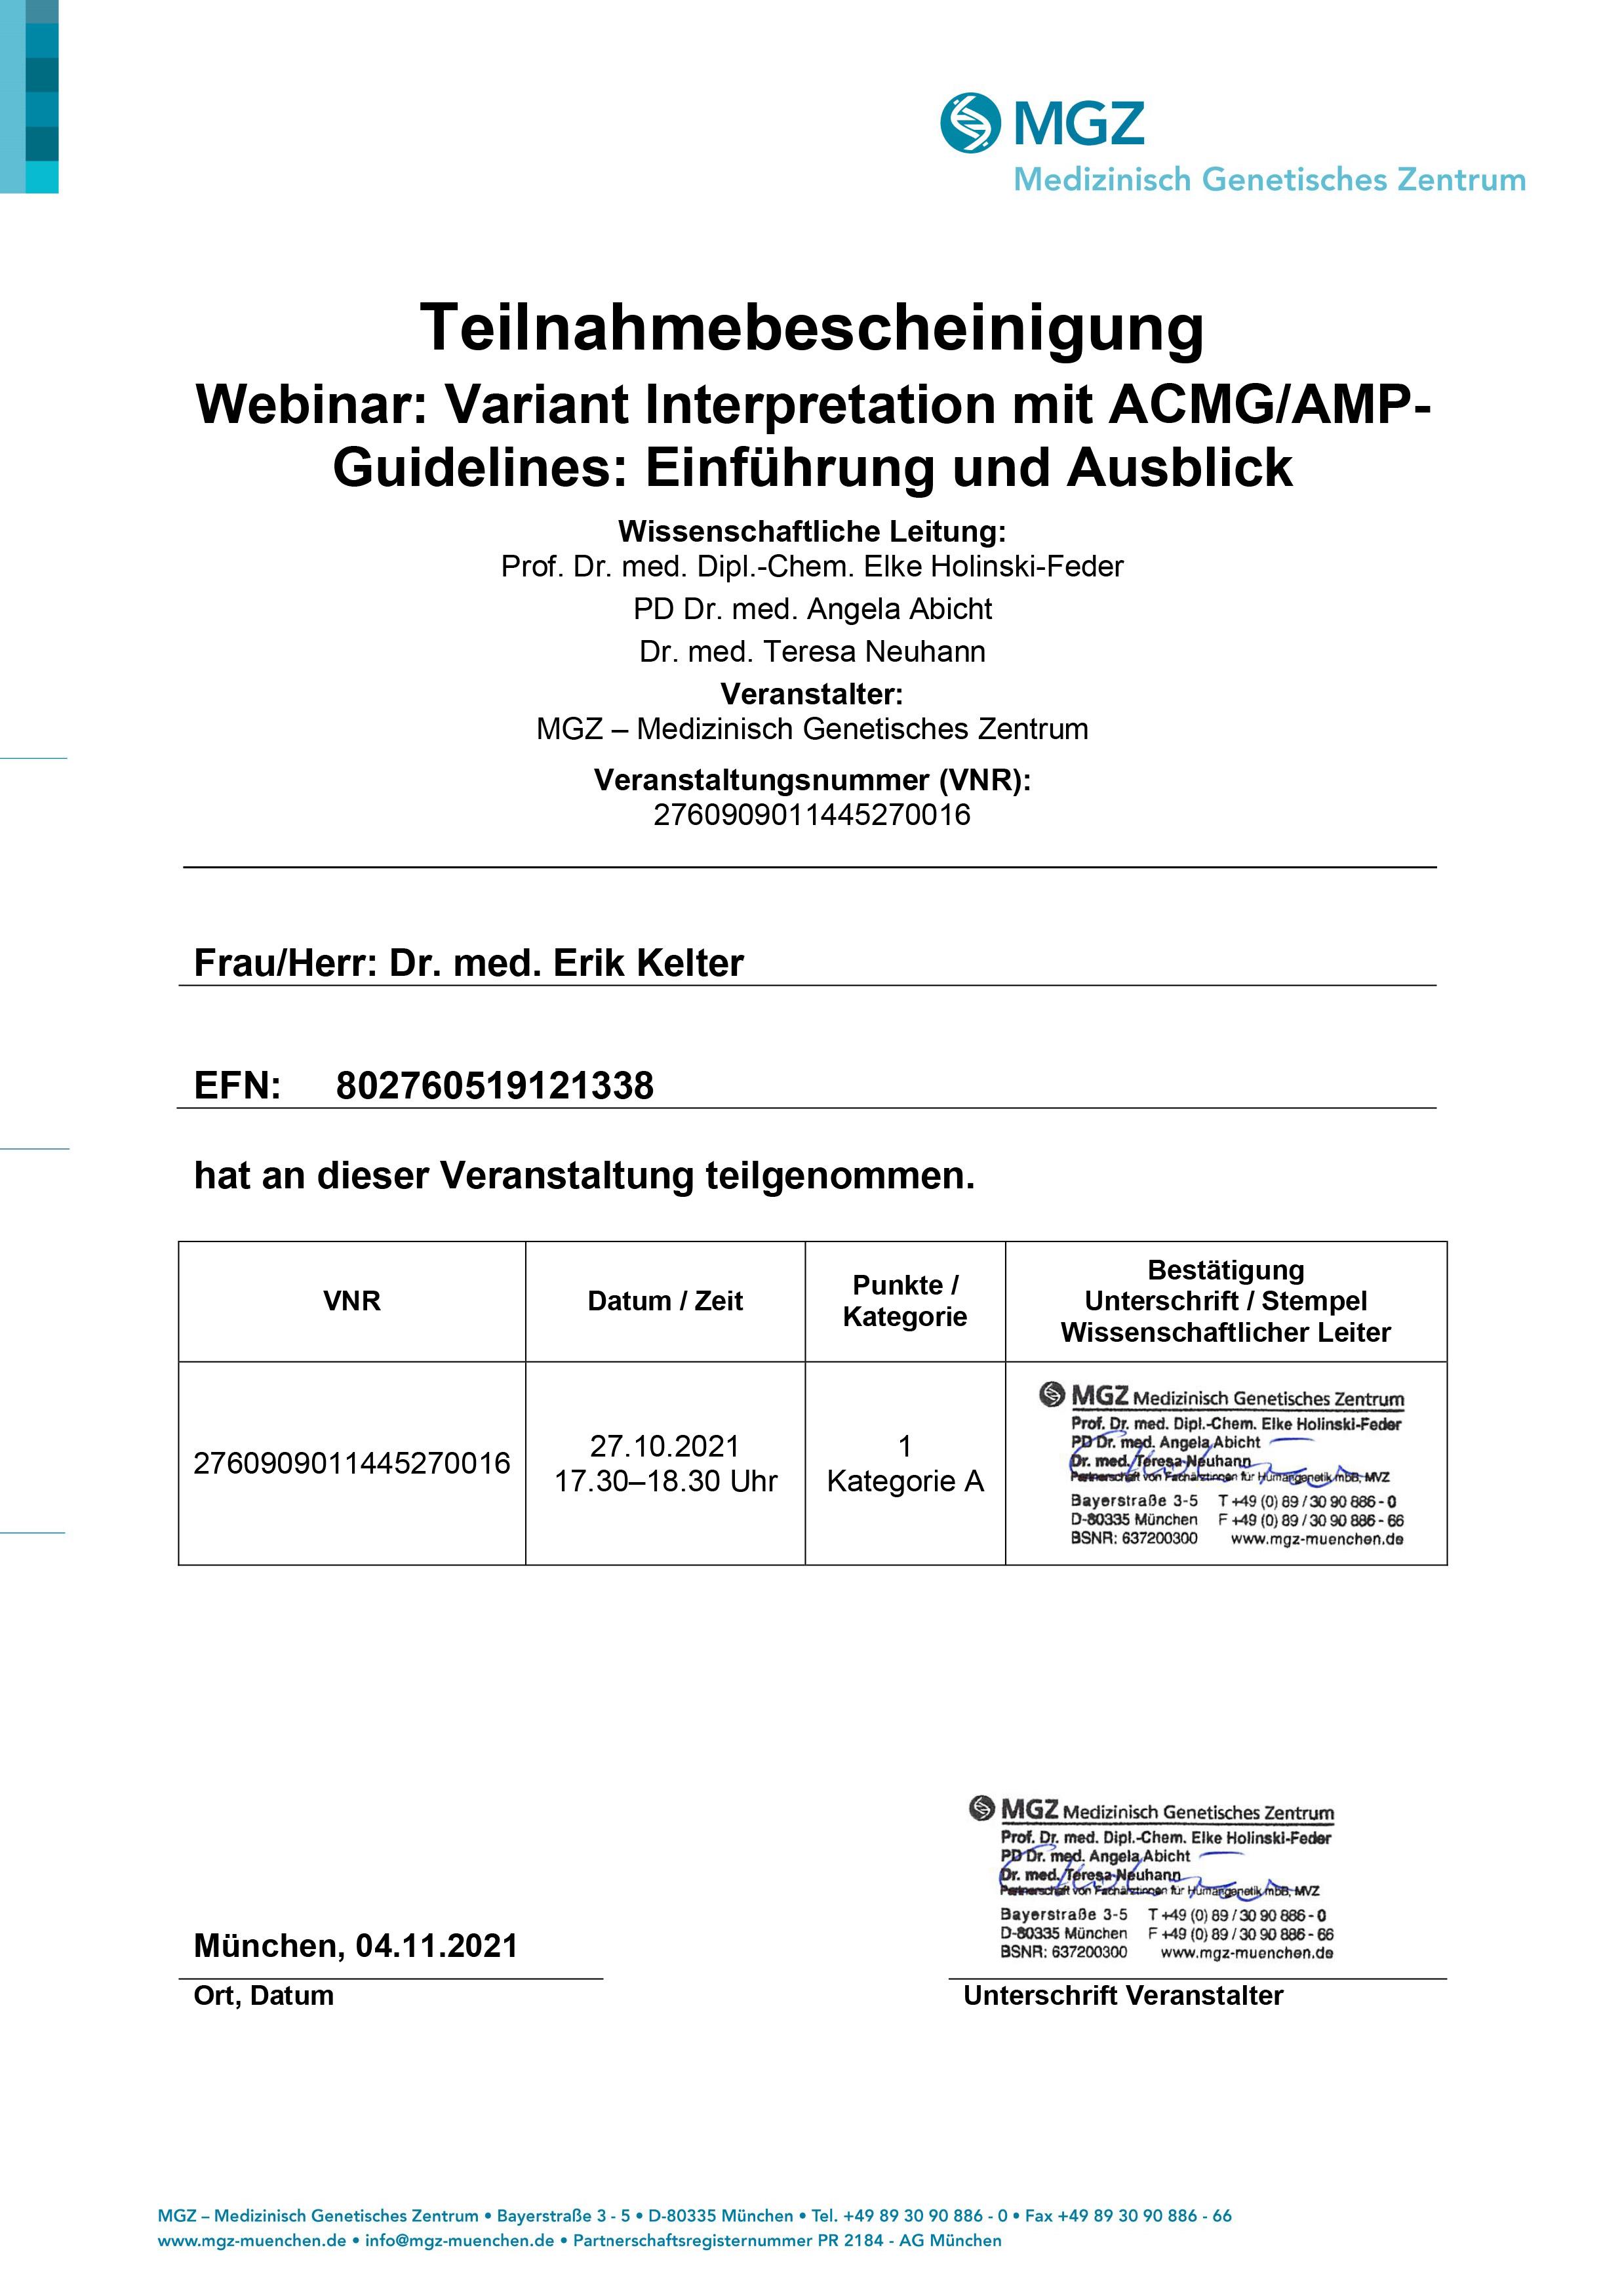 54 MGZ Teilnahmebescheinigung Variant Interpretation ACMG AMP